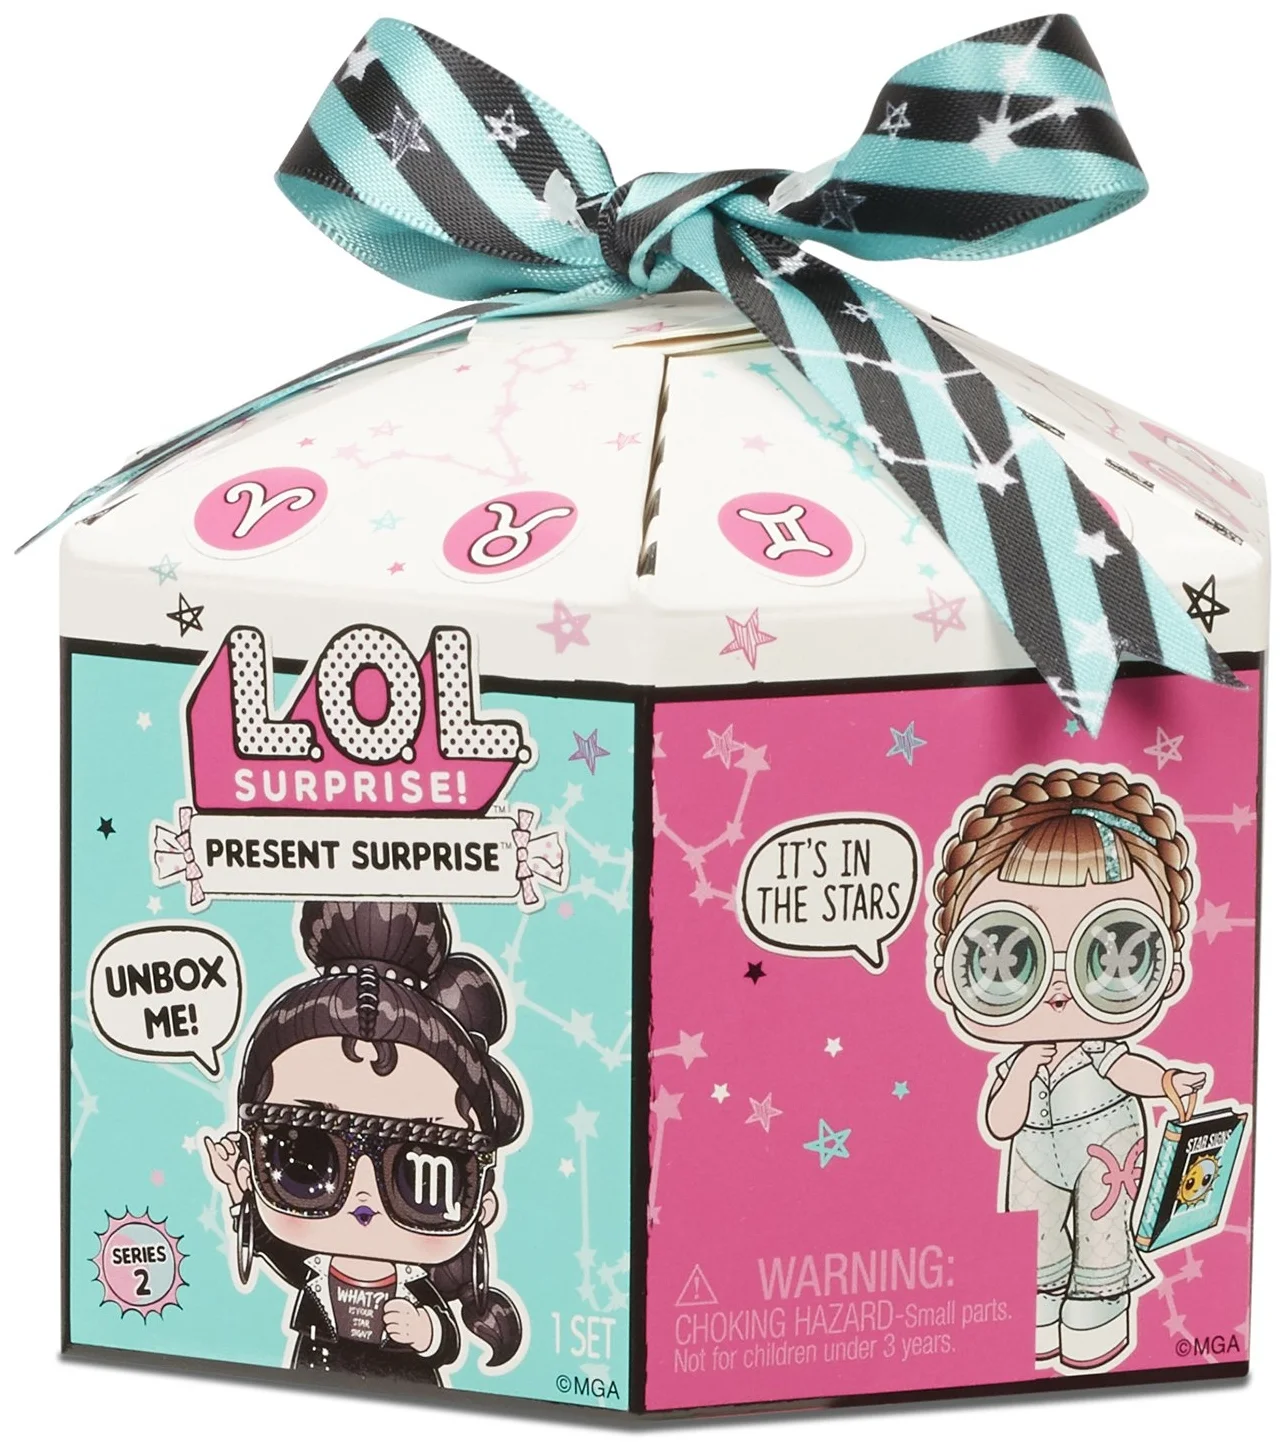 L.O.L. Surprise Present Surprise 2 серия, 572824 - материал куклы: пластик, винил